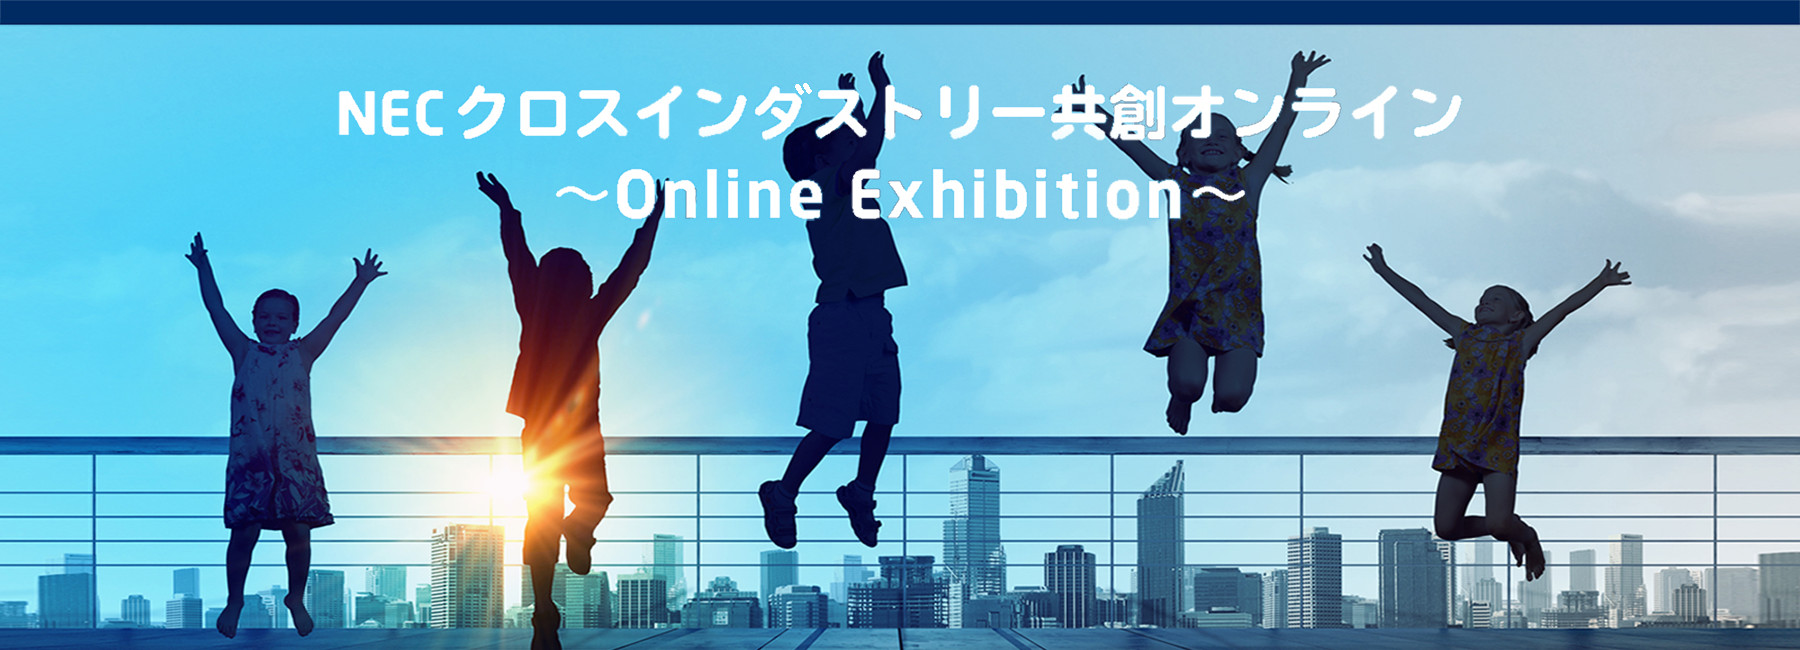 NECクロスインダストリー共創オンライン 〜Online Exhibition〜